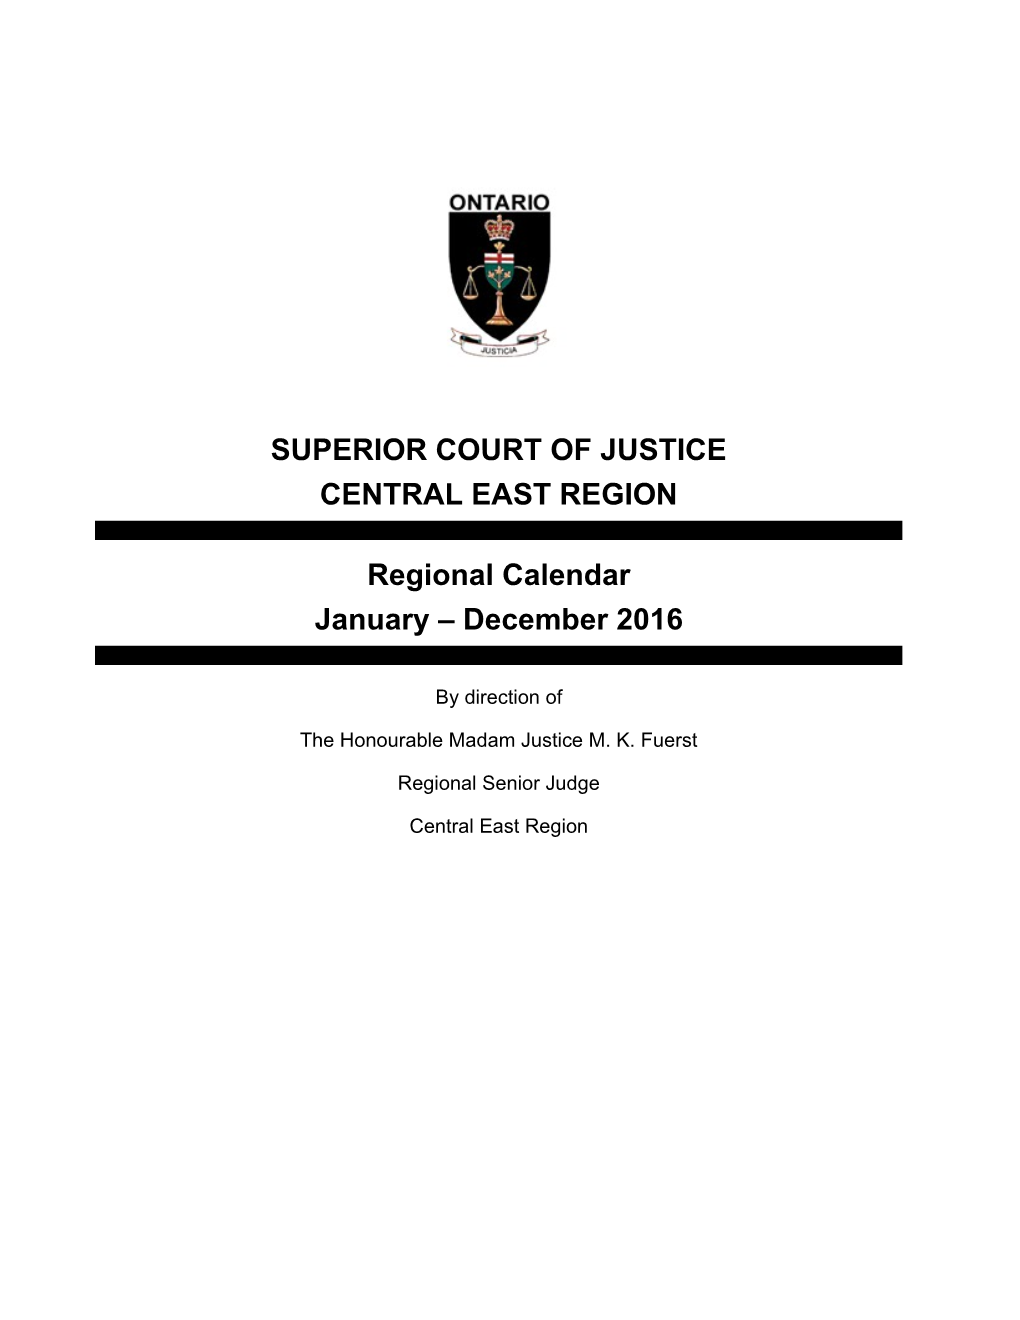 Central East Regional Calendar - January to December 2016